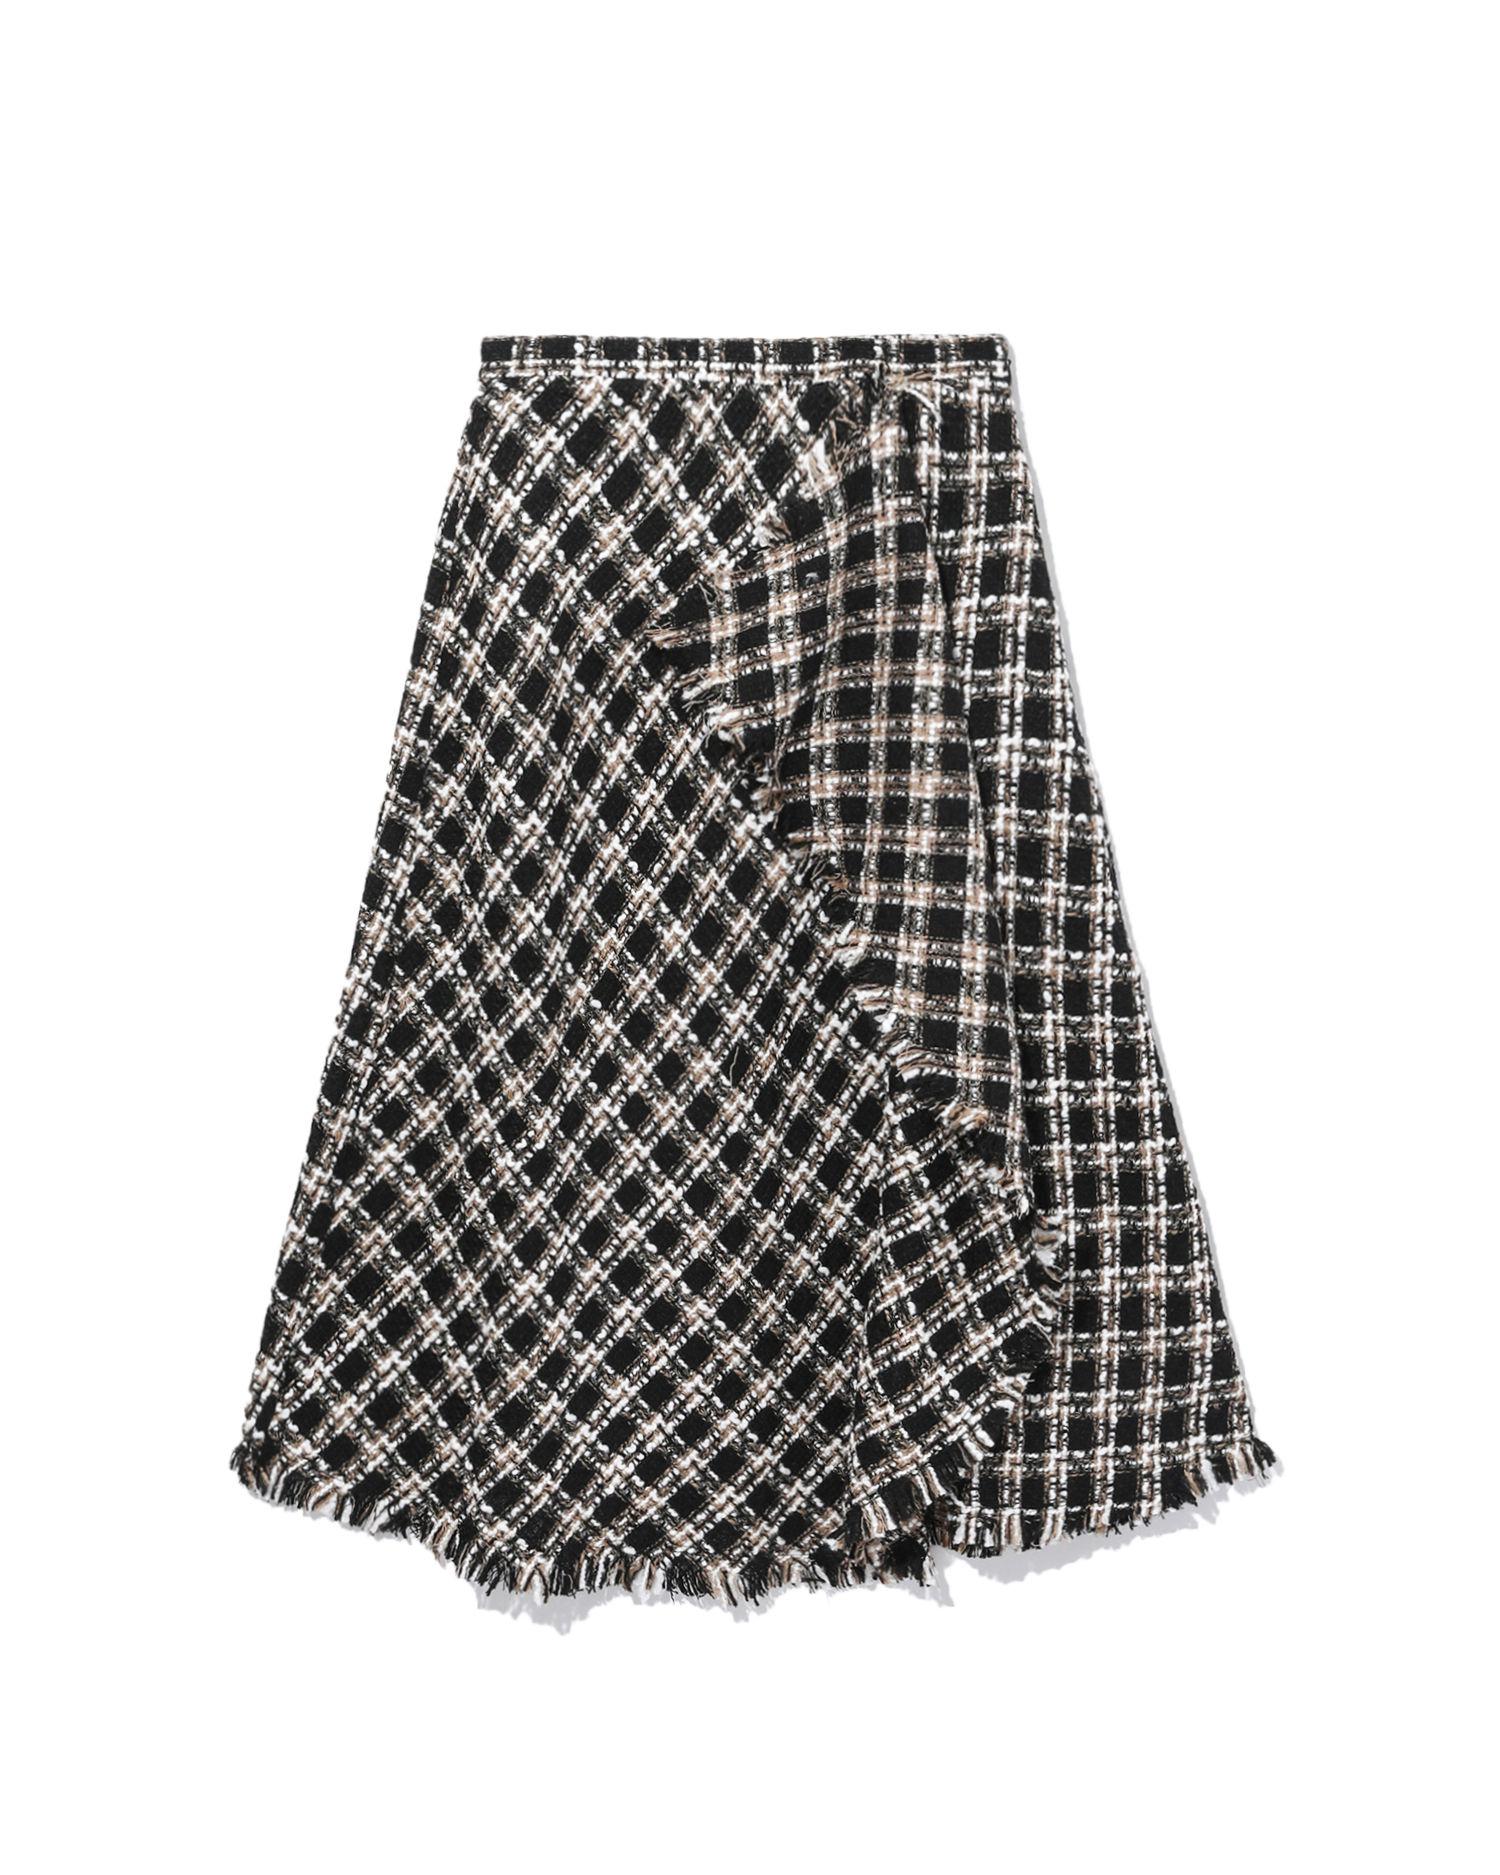 Layered checker skirt by B+AB